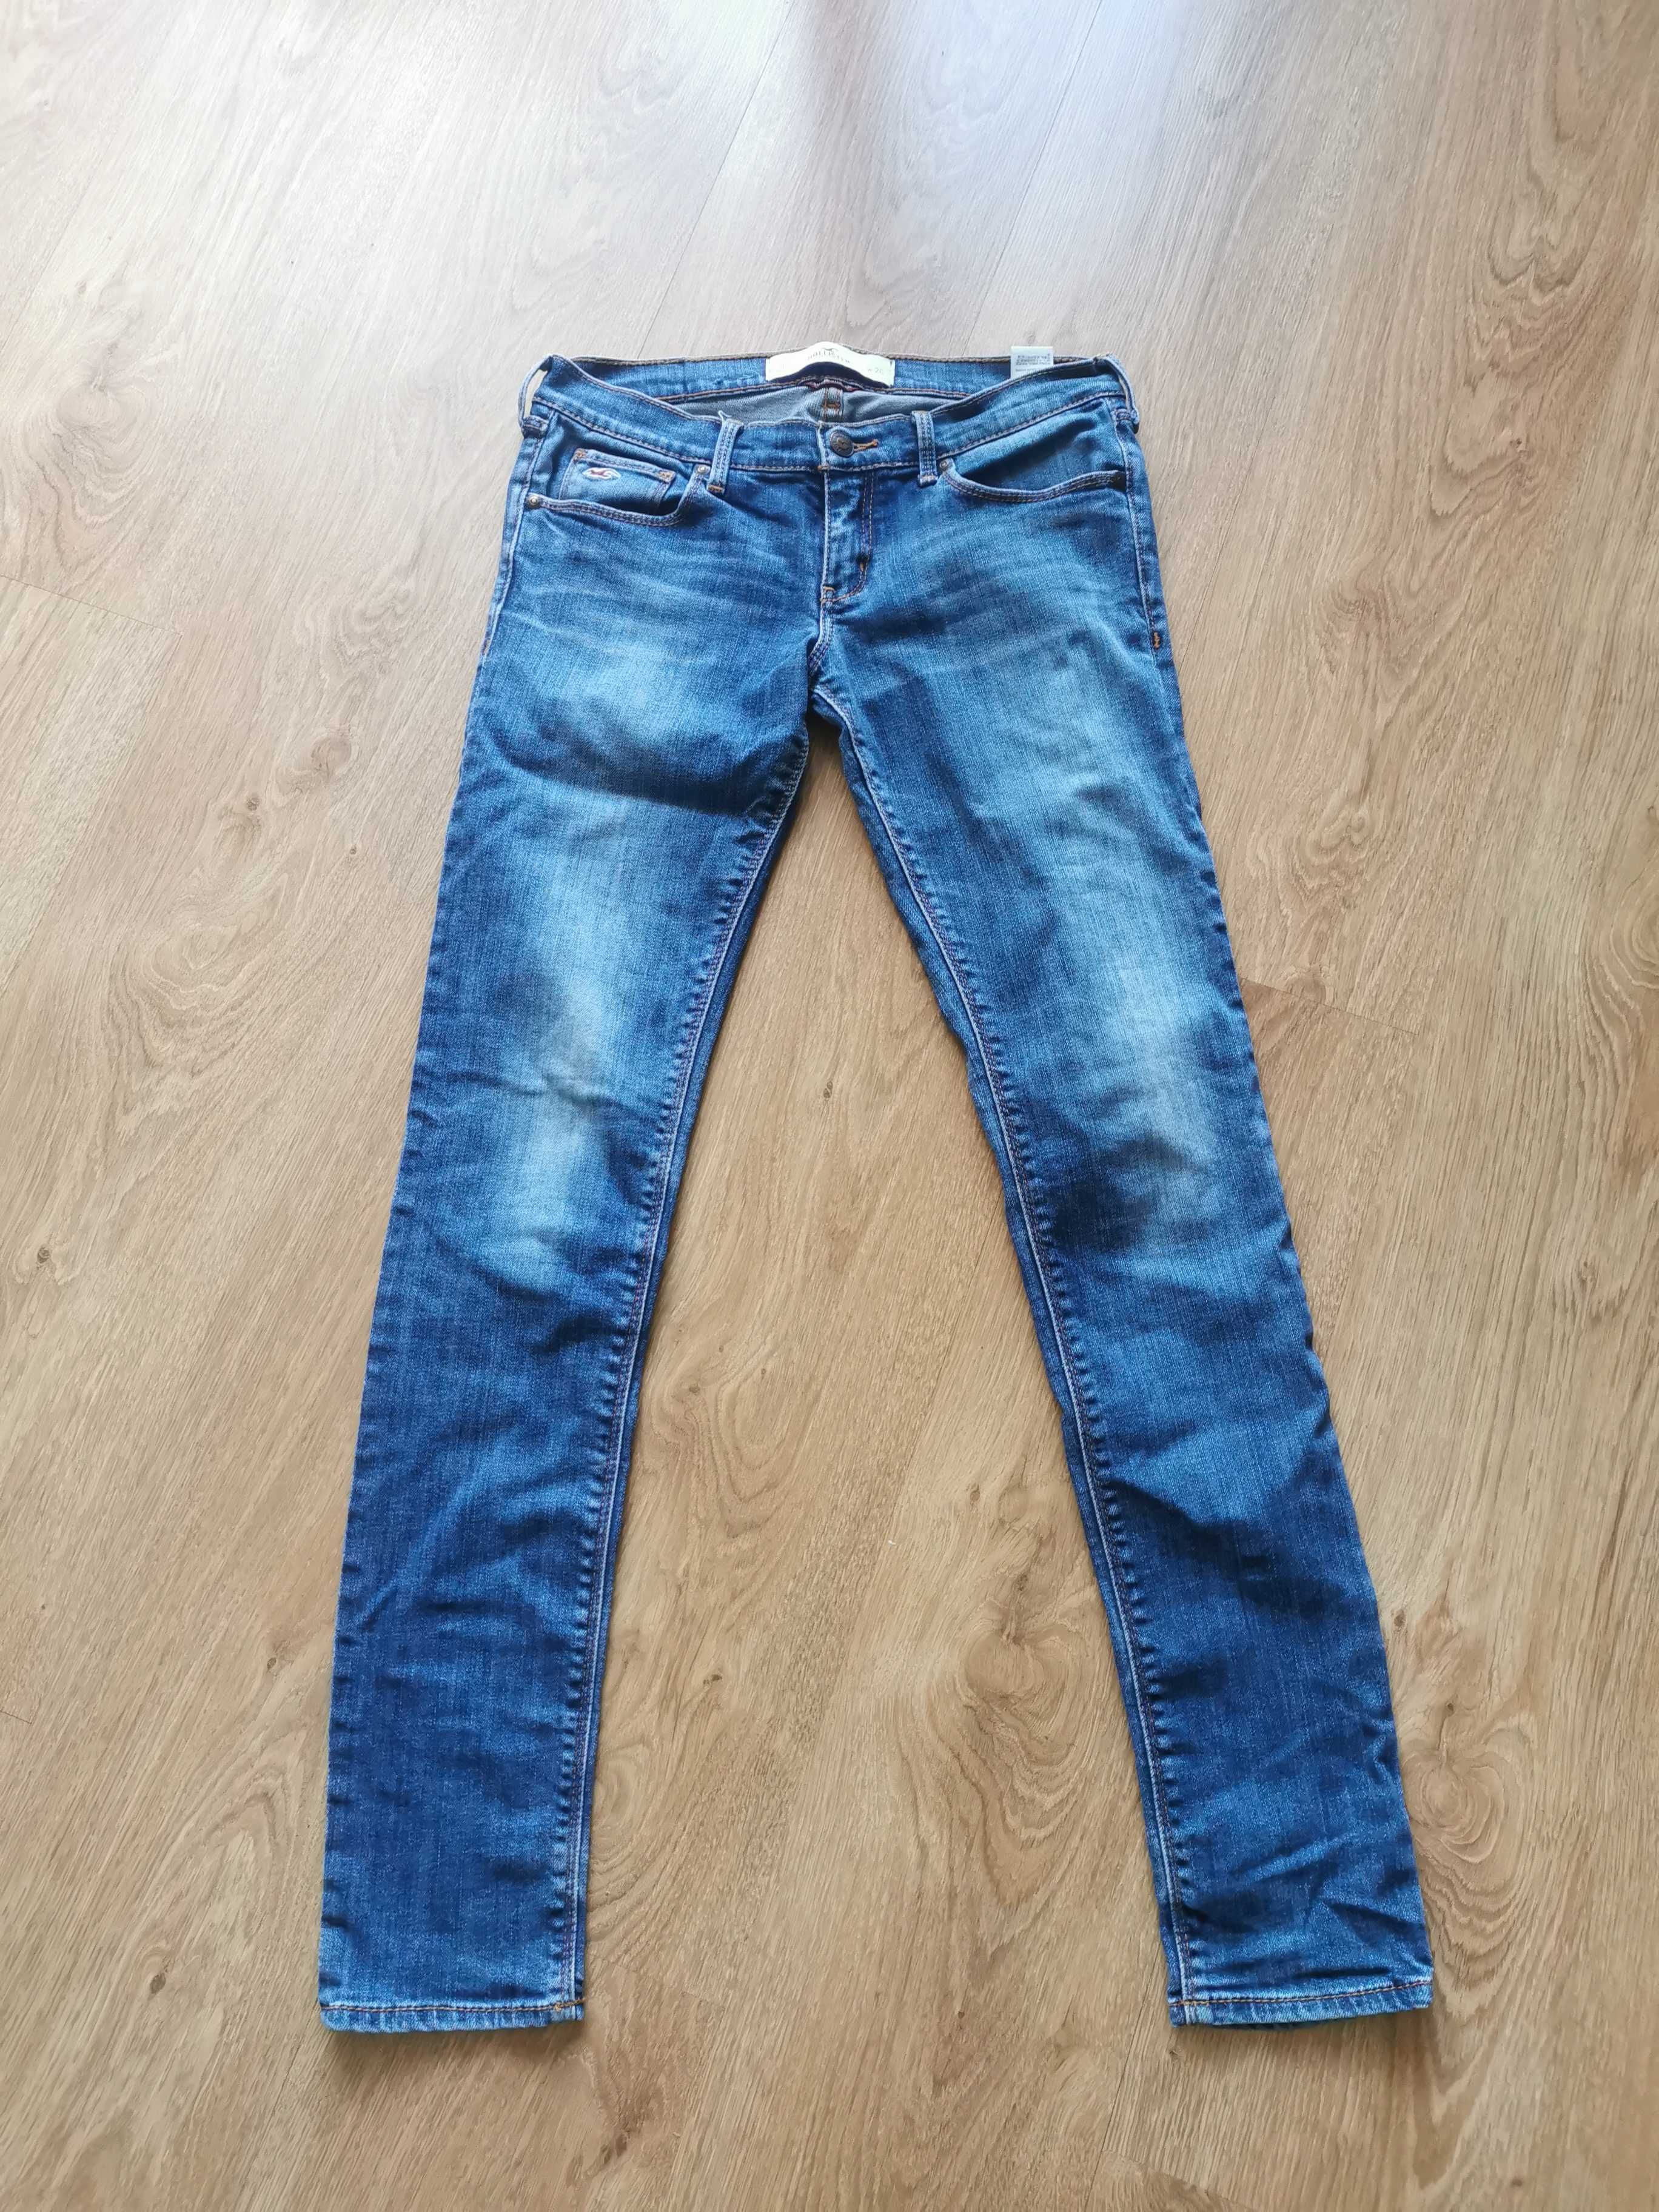 Hollister California spodnie damskie jeansy w26